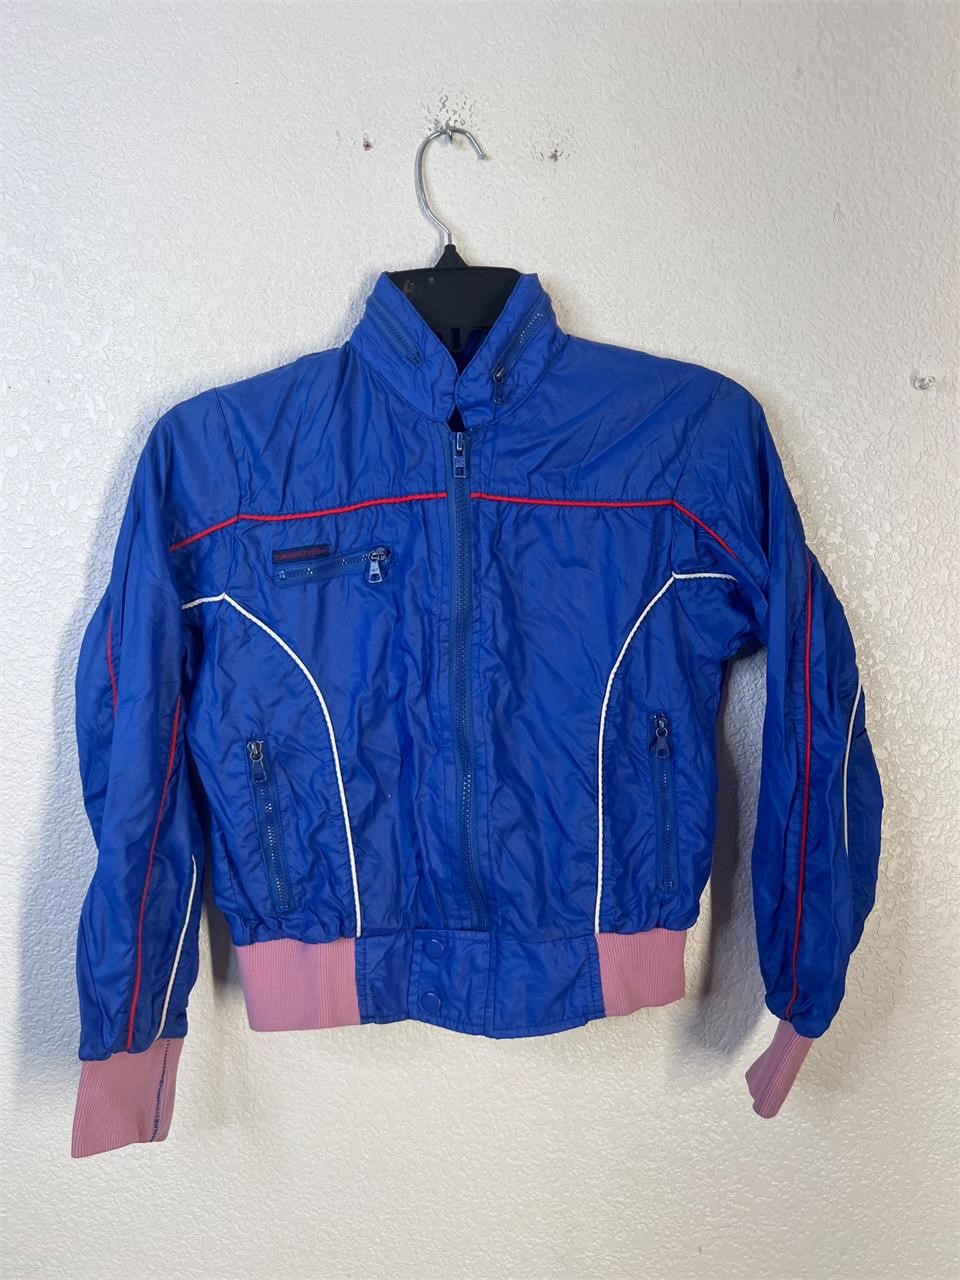 Vintage 80s Youth Windbreaker Jacket